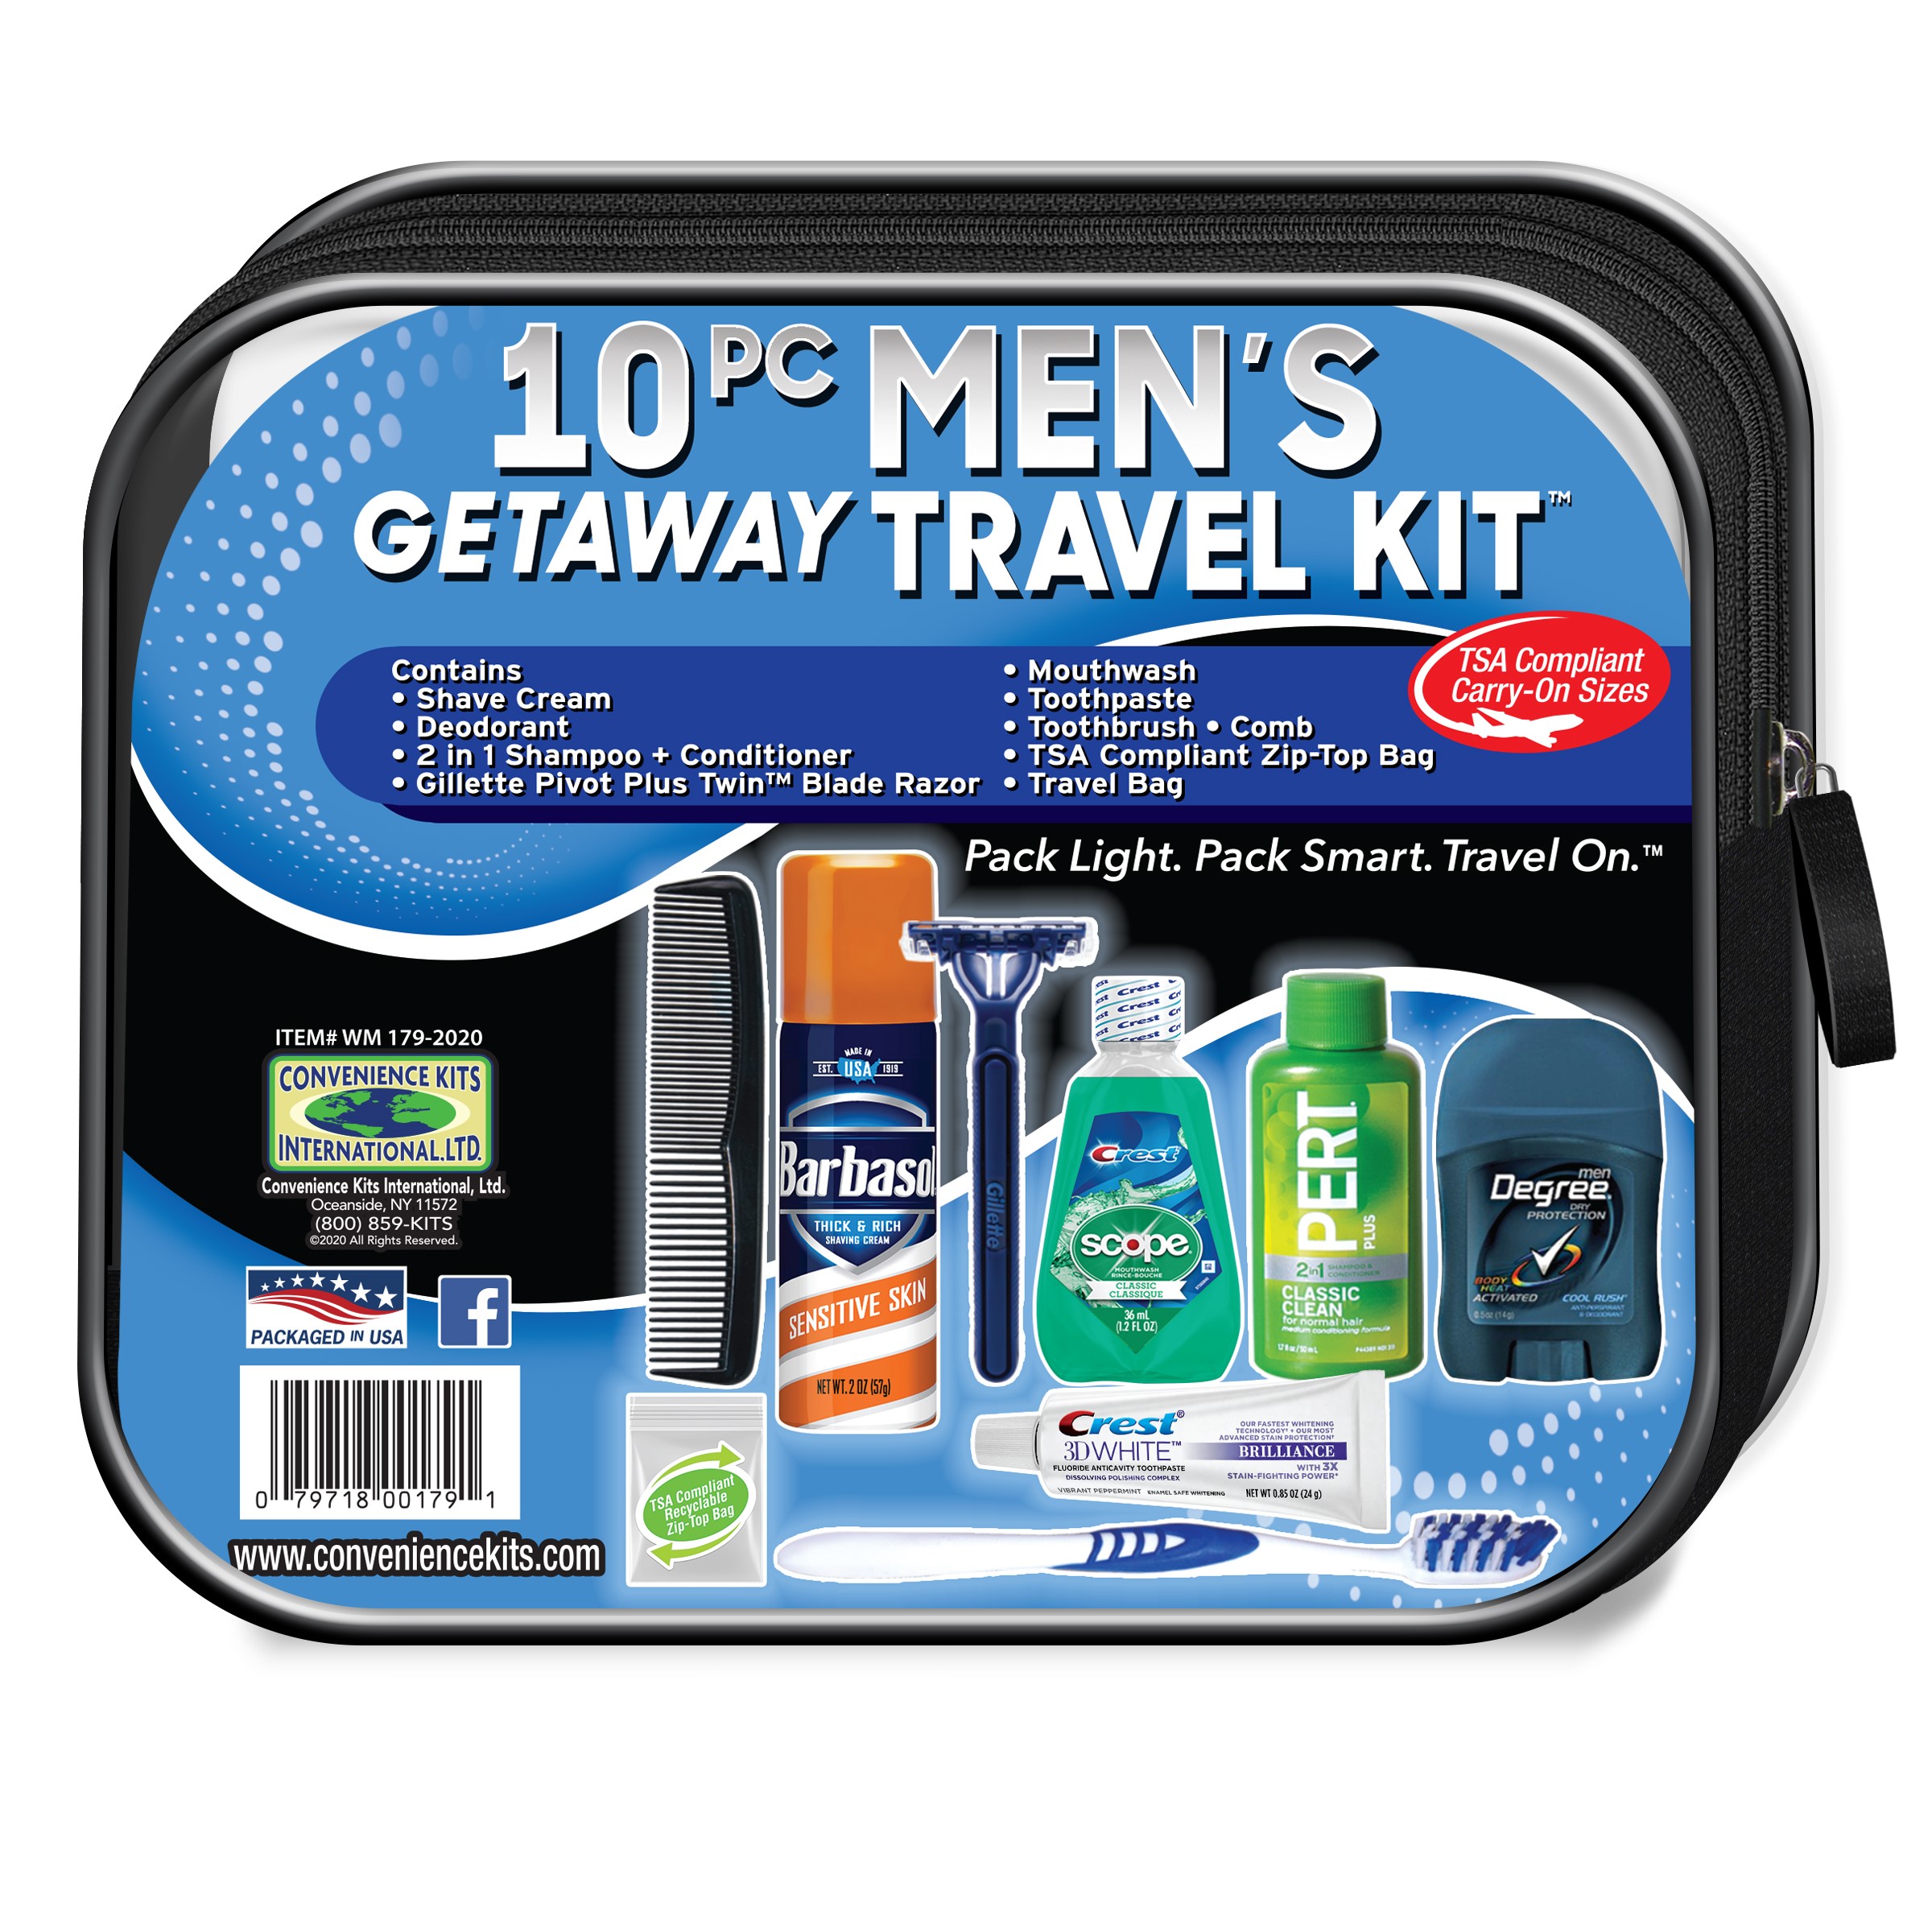 Man on the Go Men&#8217;s Get Away Travel Kit, 10 pc - image 4 of 9